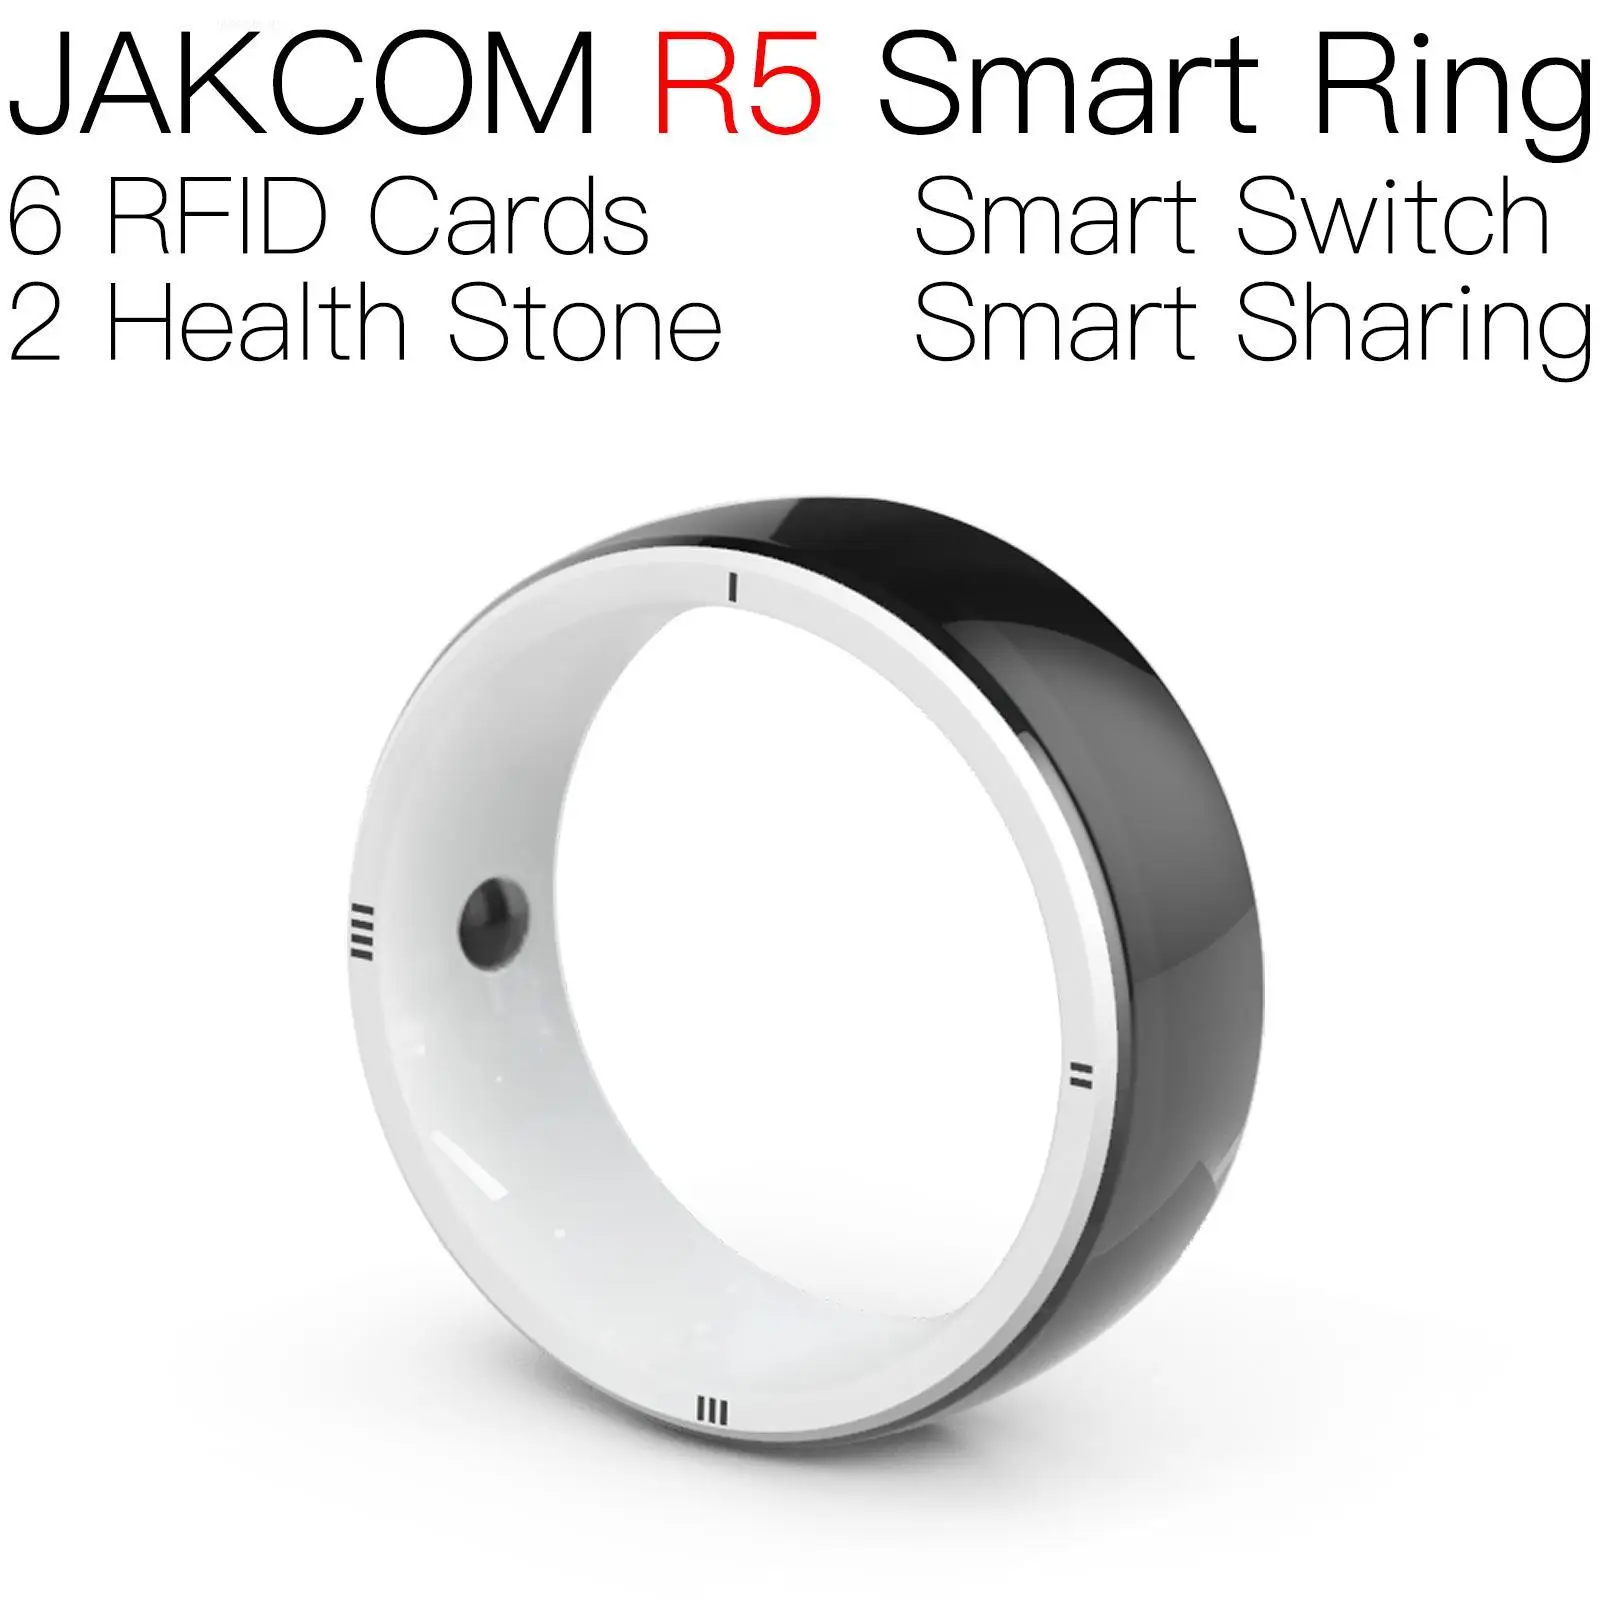 

JAKCOM R5 Smart Ring Match to nfc duplicator uid rewritable card animals ear tags mini tag rfid 125khz sticker logo s50 p11